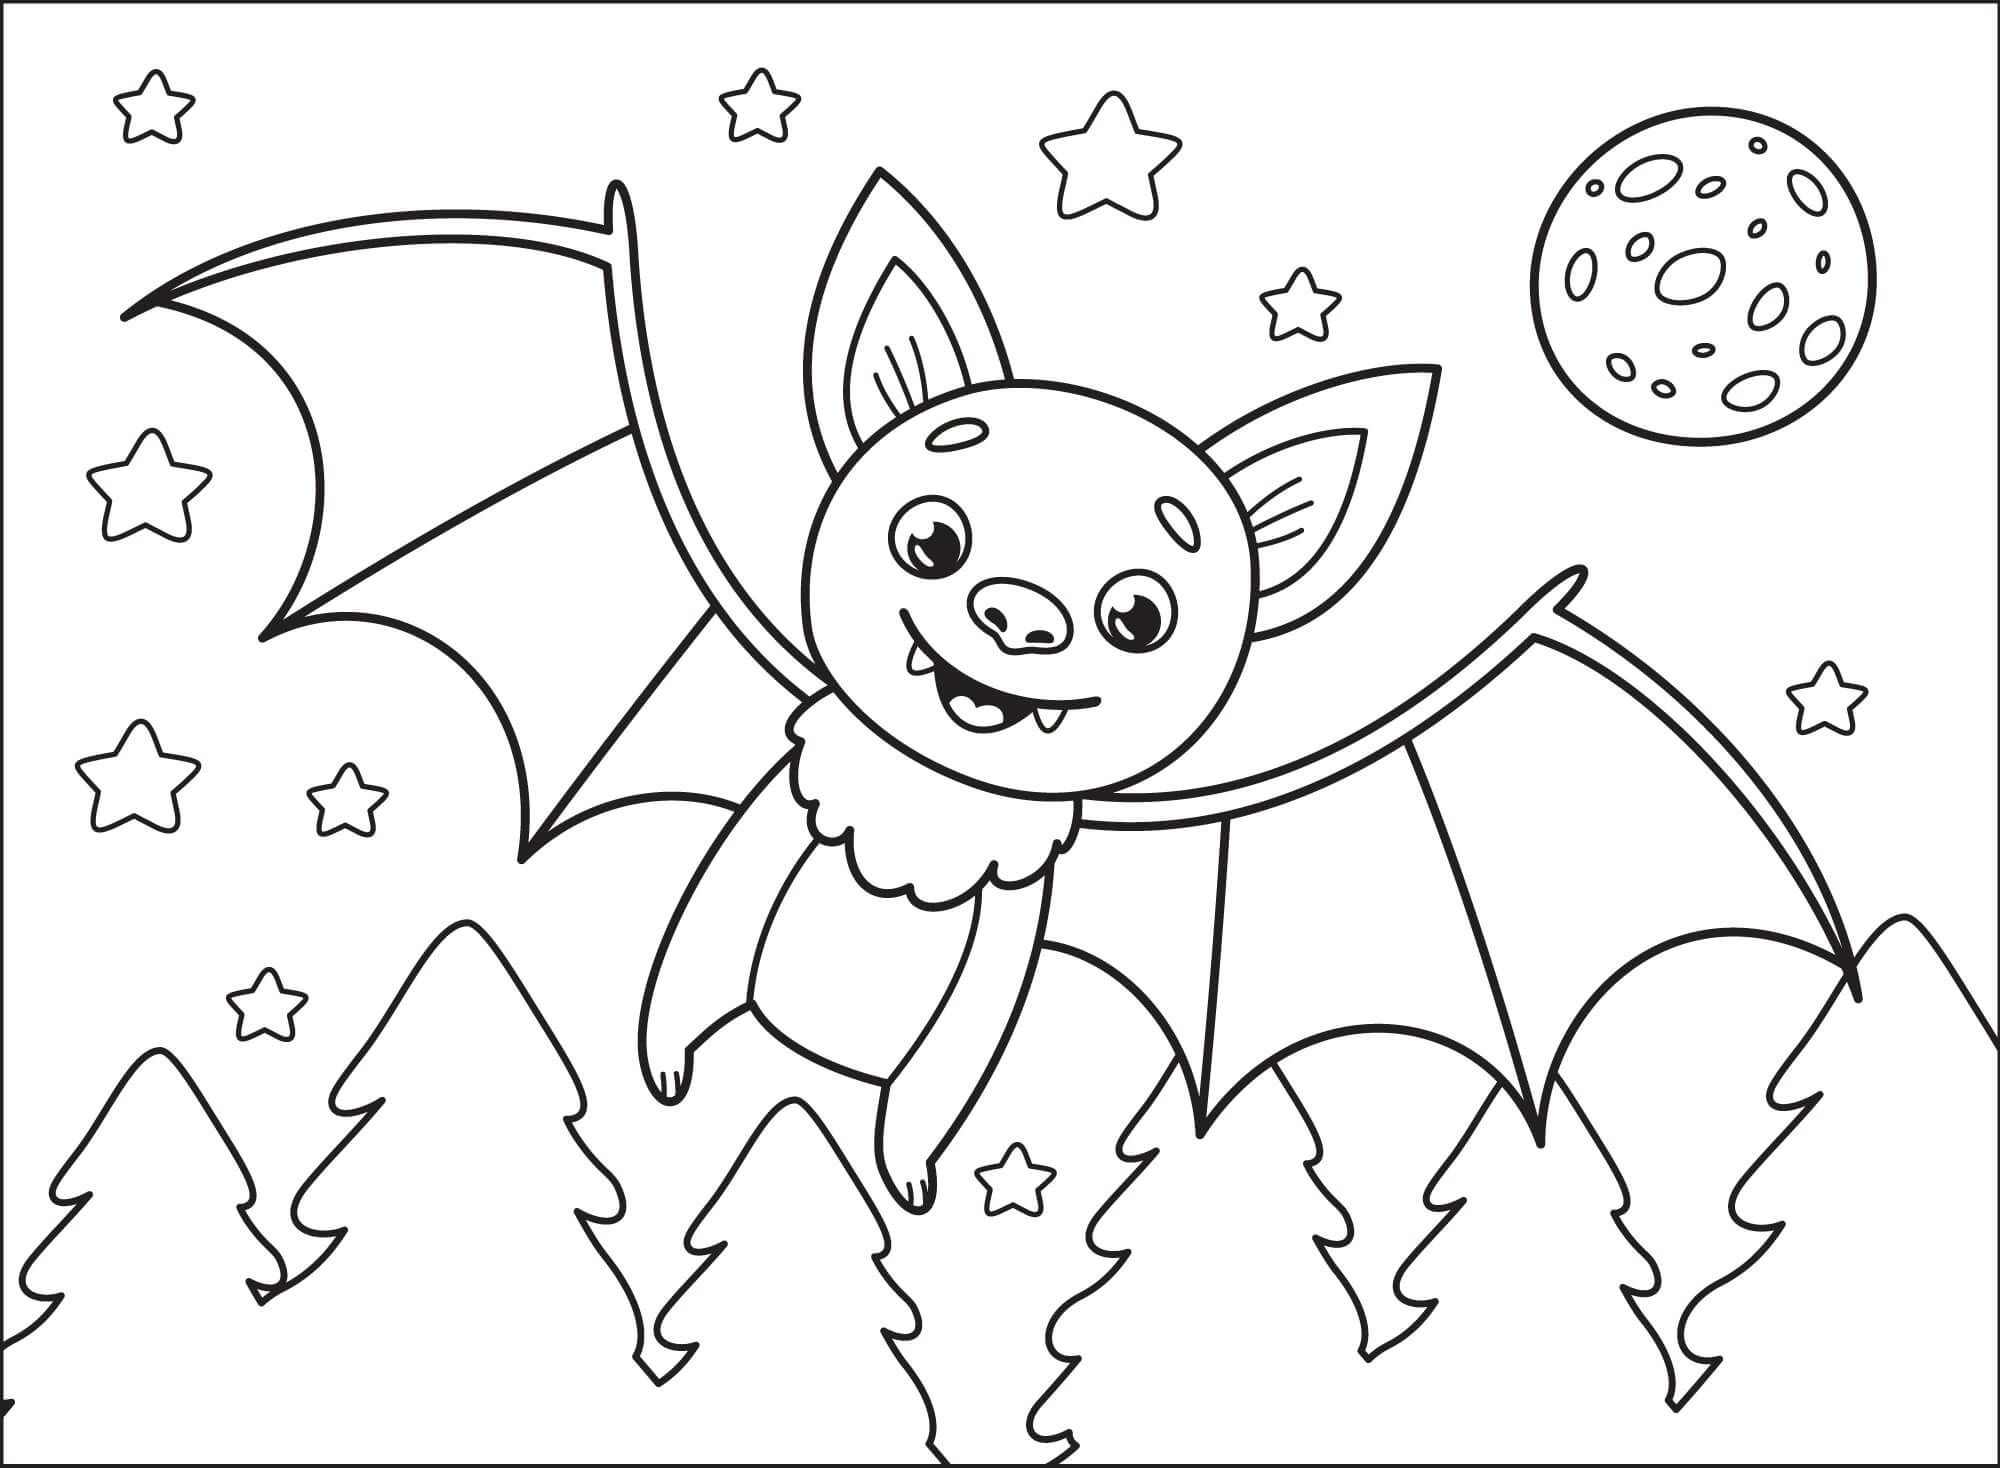 How To Draw Bat